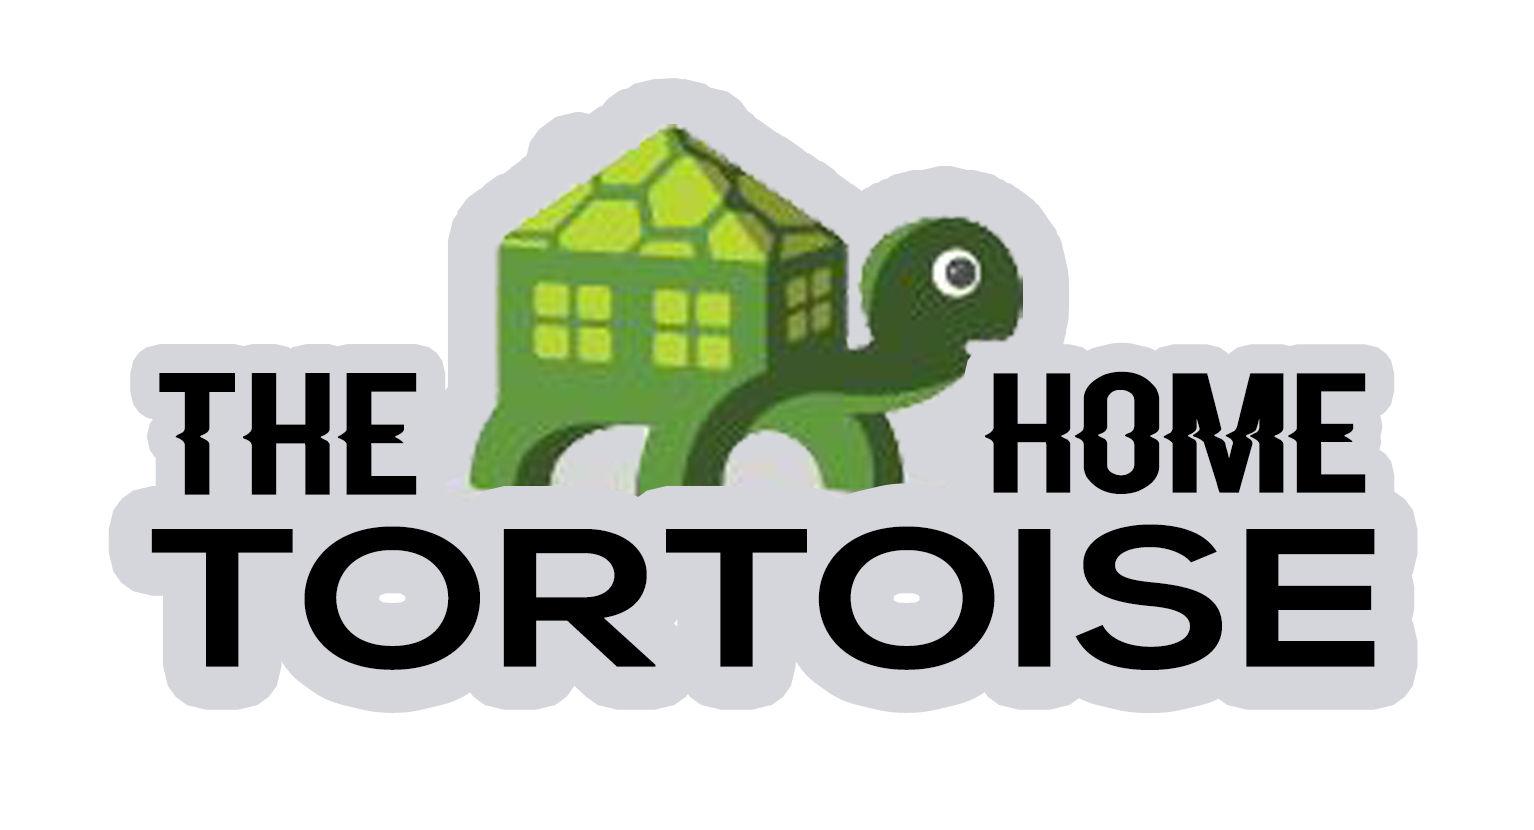 The Tortoise Home